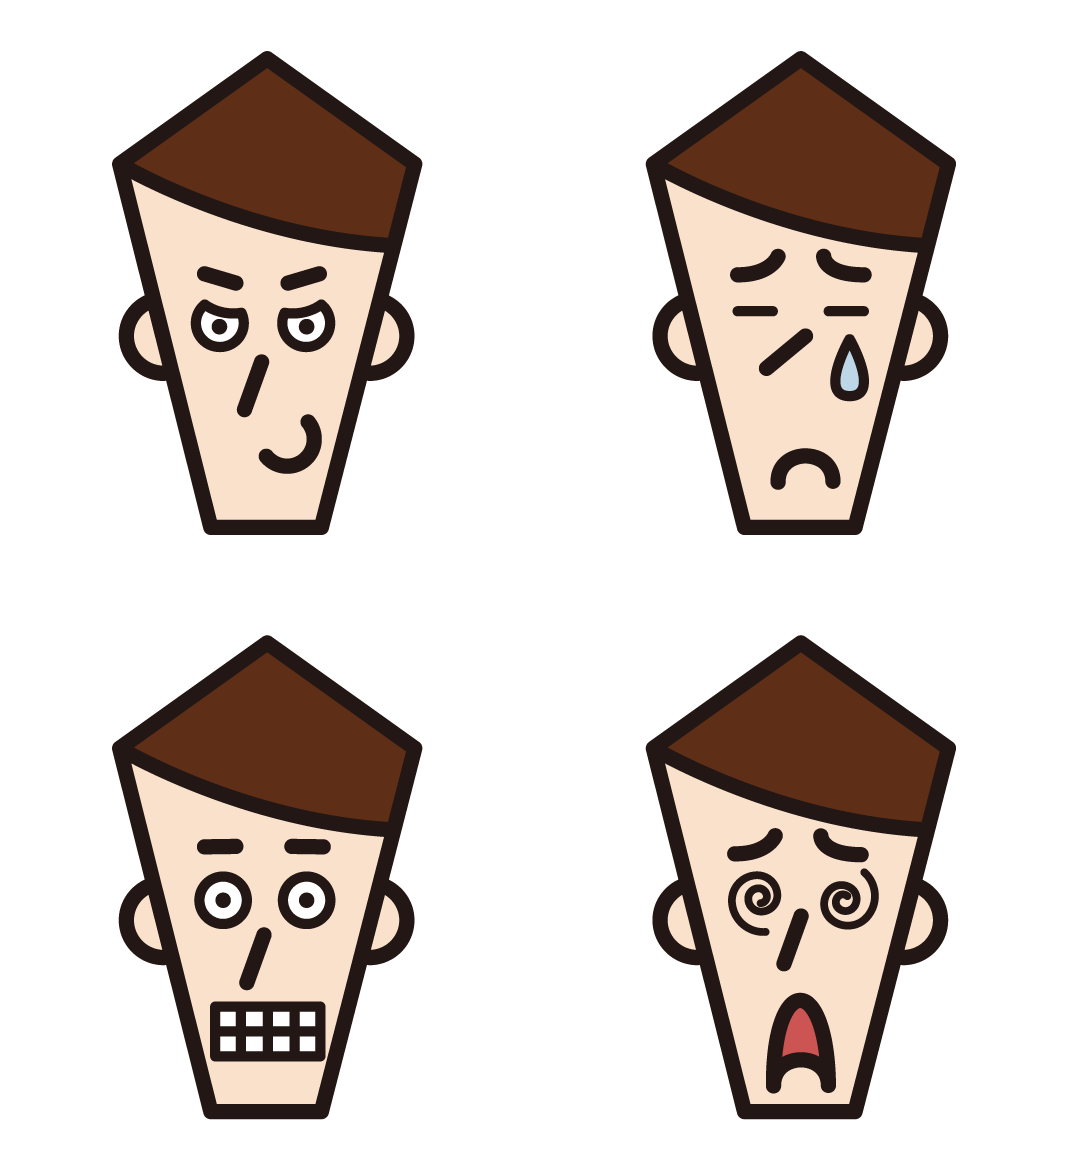 2 illustrations of various facial expressions of men